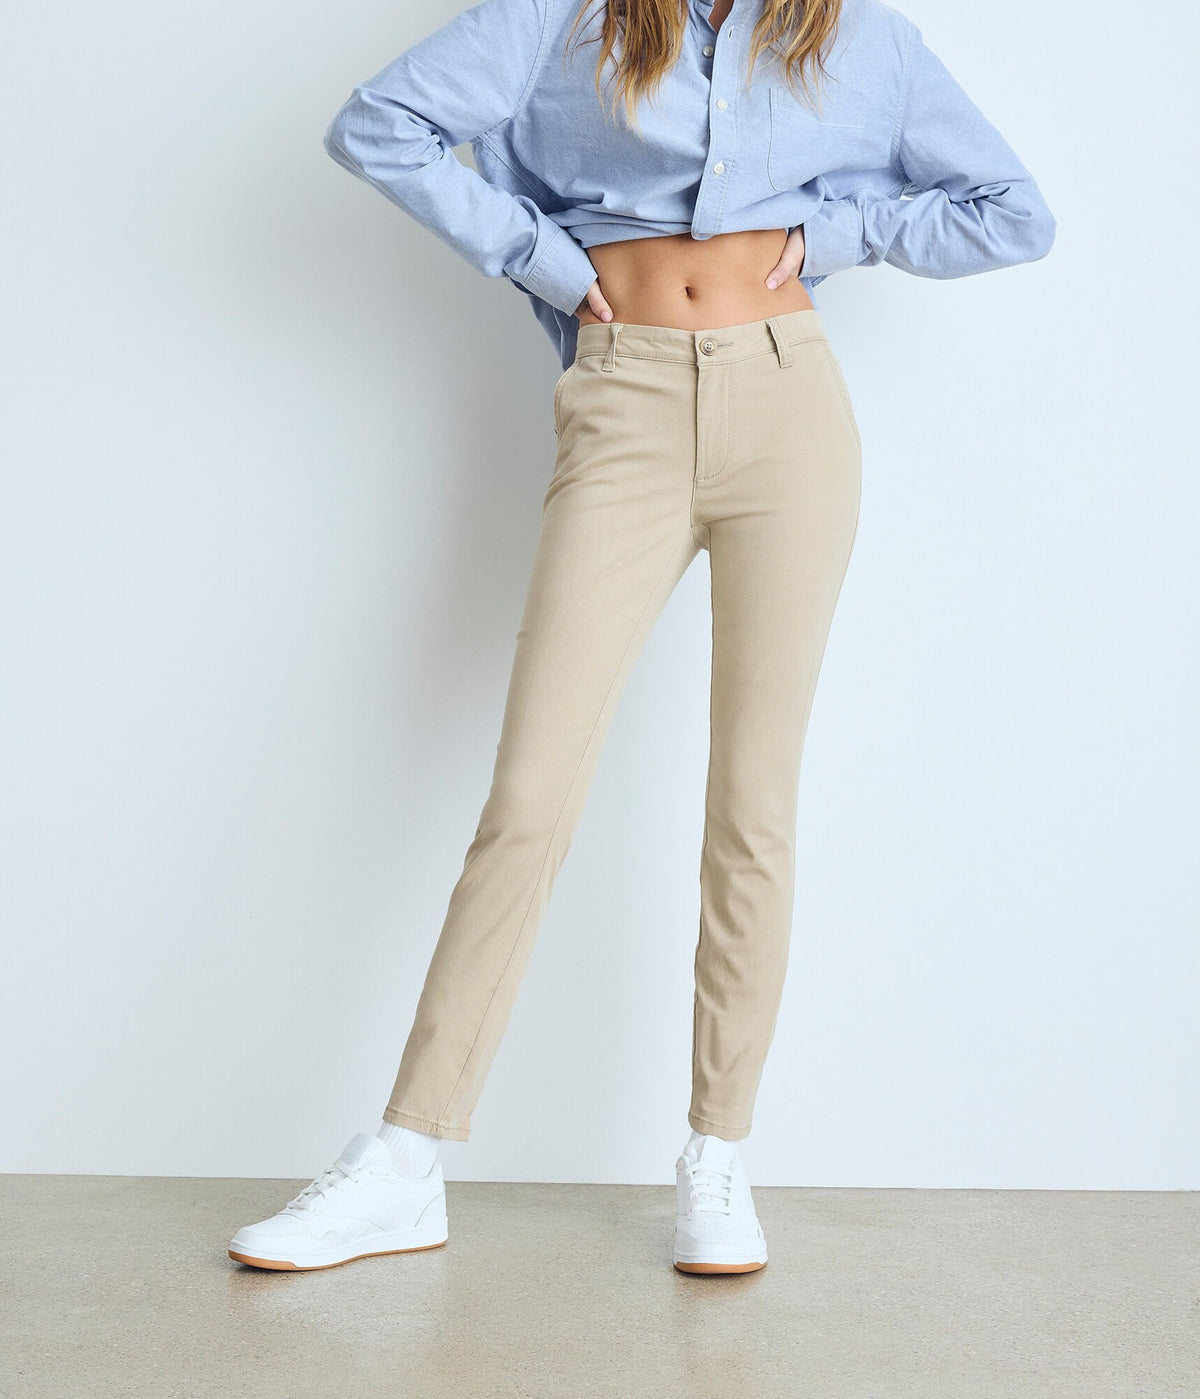 Aeropostale Womens' Skinny Uniform Pants - Tan - Size 6 L - Polyester - Teen Fashion & Clothing Summer Tan